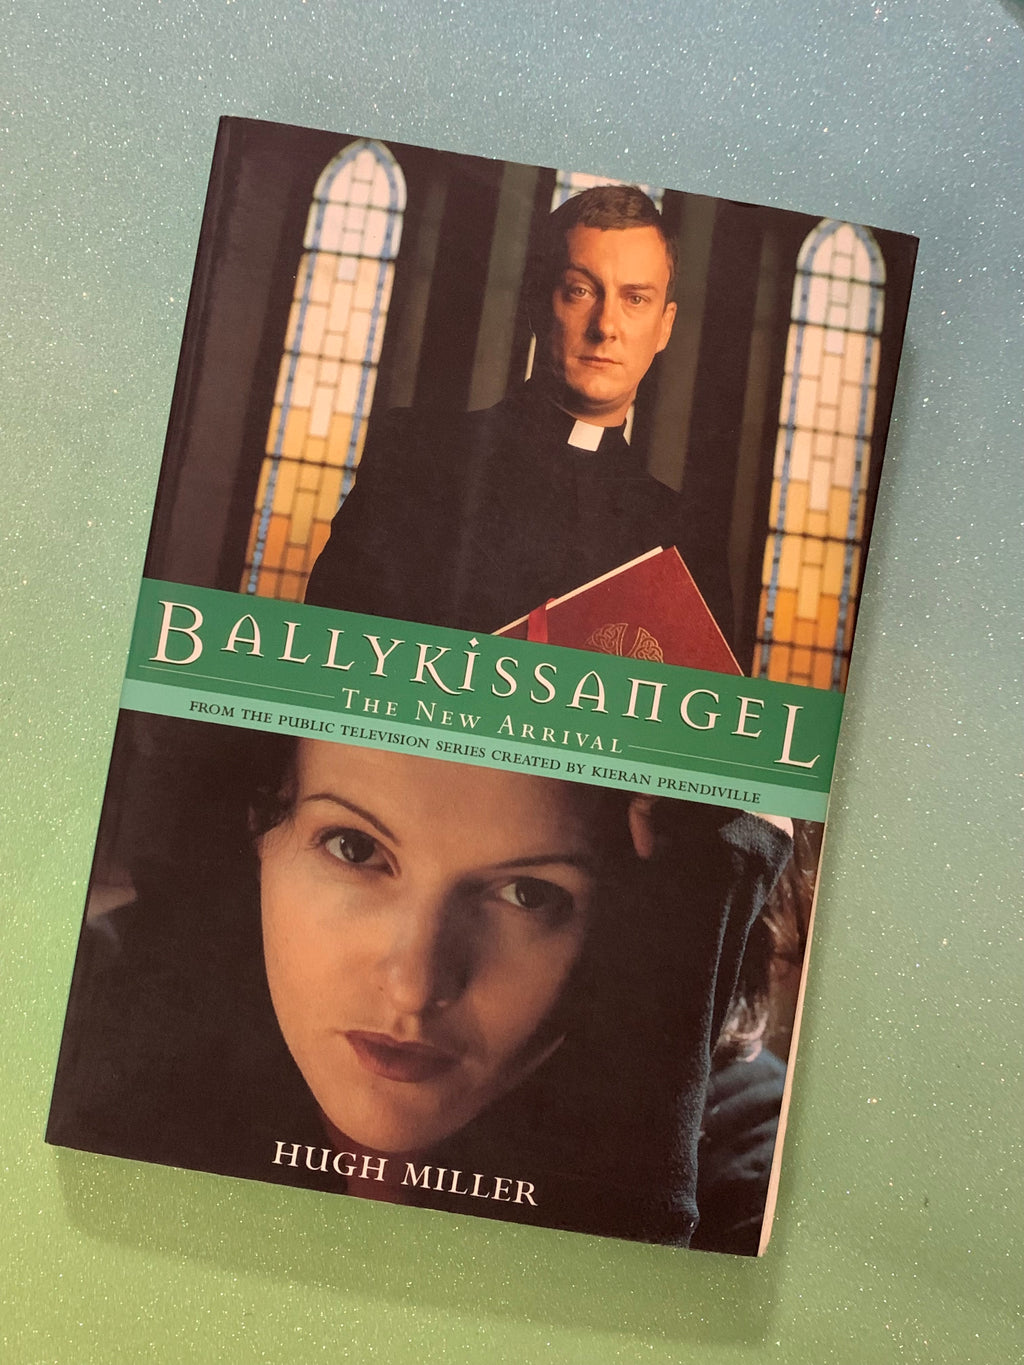 Ballykissangel: The New Arrival- By Hugh Miller